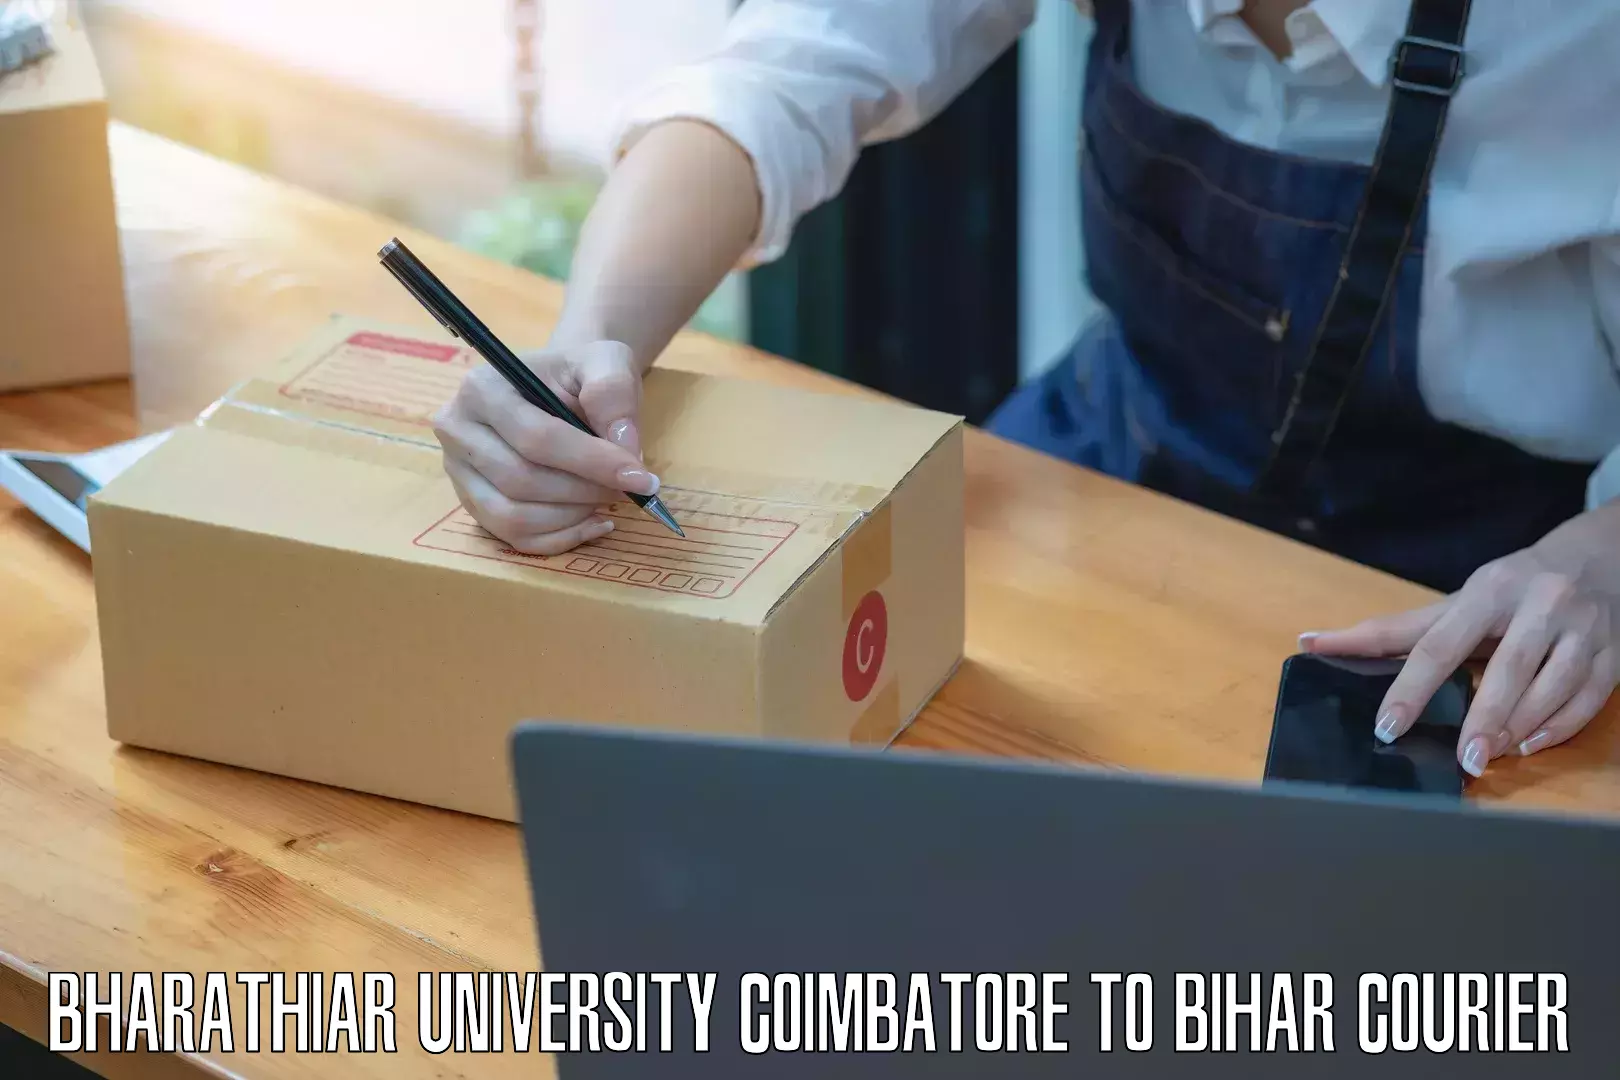 Courier membership Bharathiar University Coimbatore to Bihar